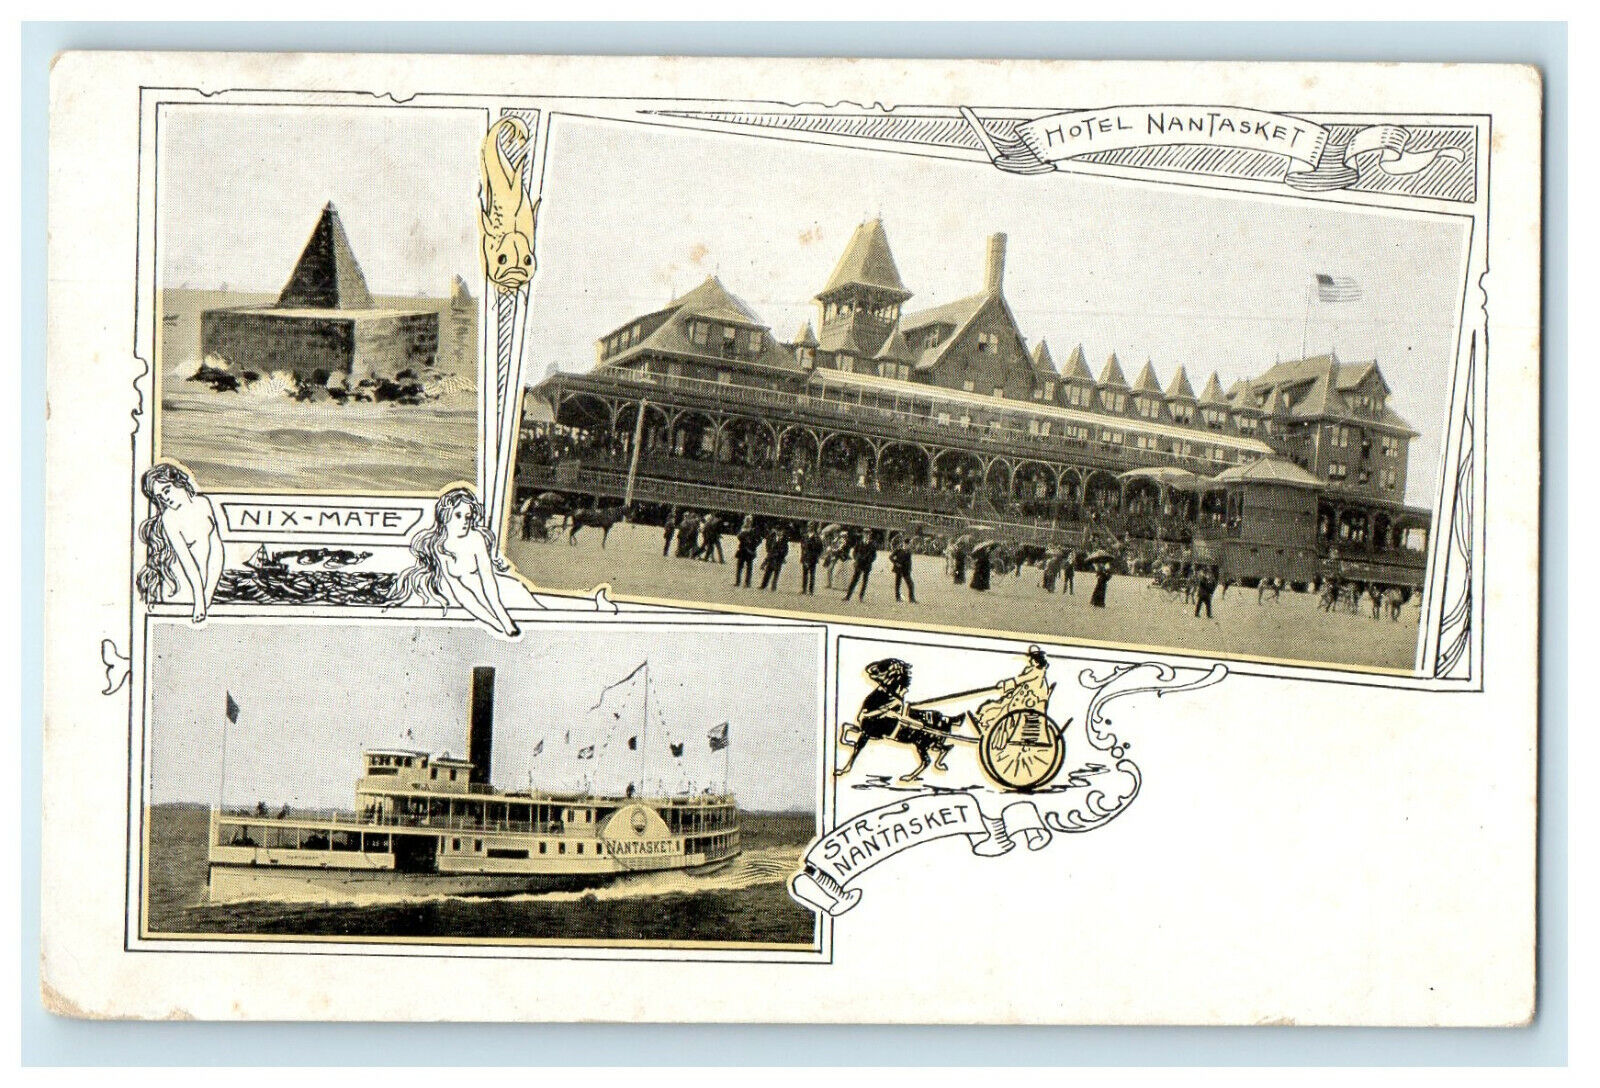 c1900s Hotel, Steamboat and Nix Mate in Nantasket, Massachusetts MA Postcard